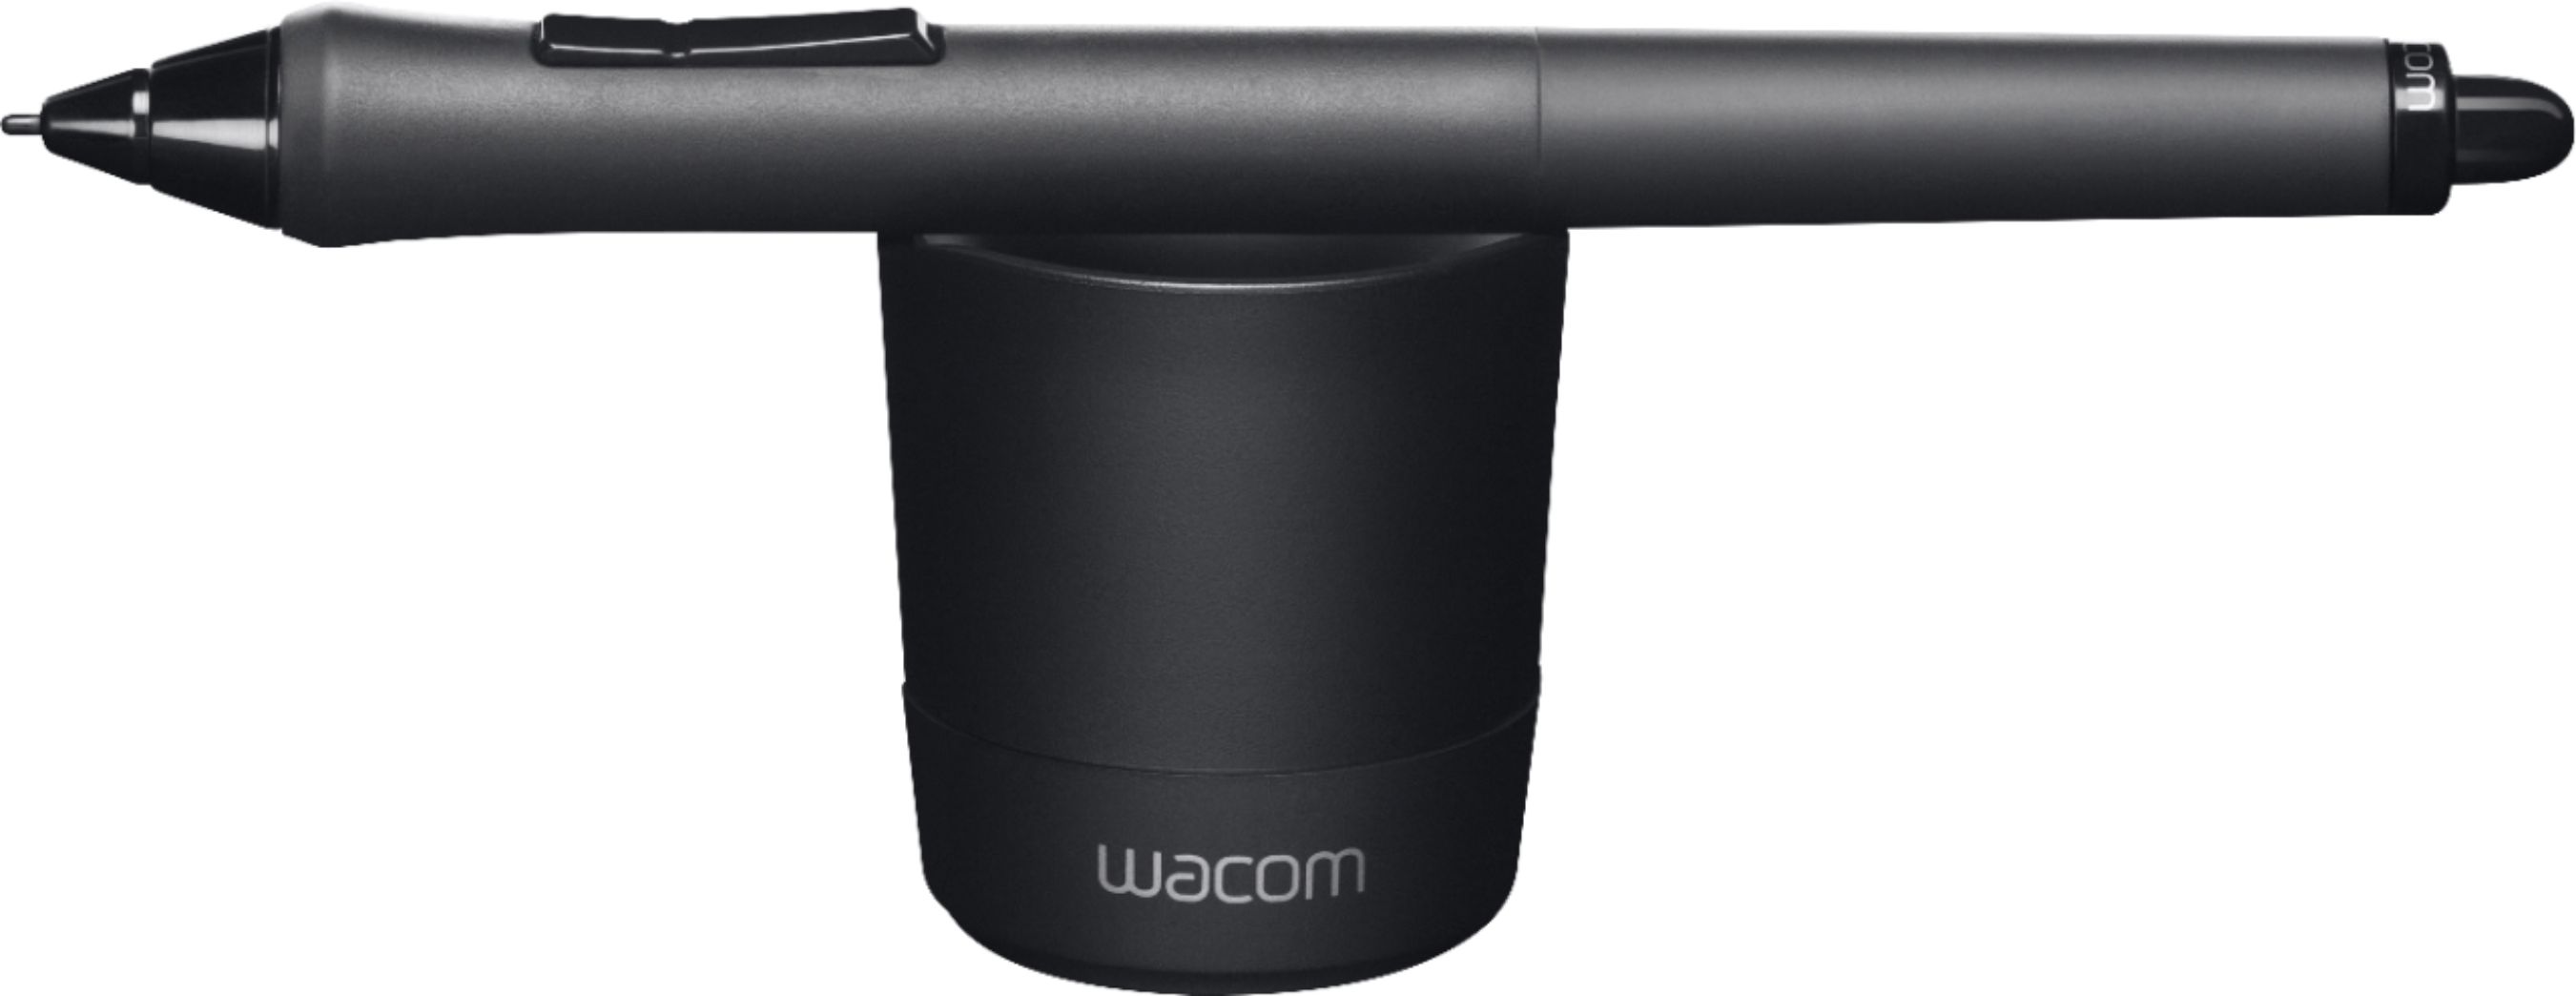 KP501E2 Wacom Grip Pen for Intuos and Cintiq 